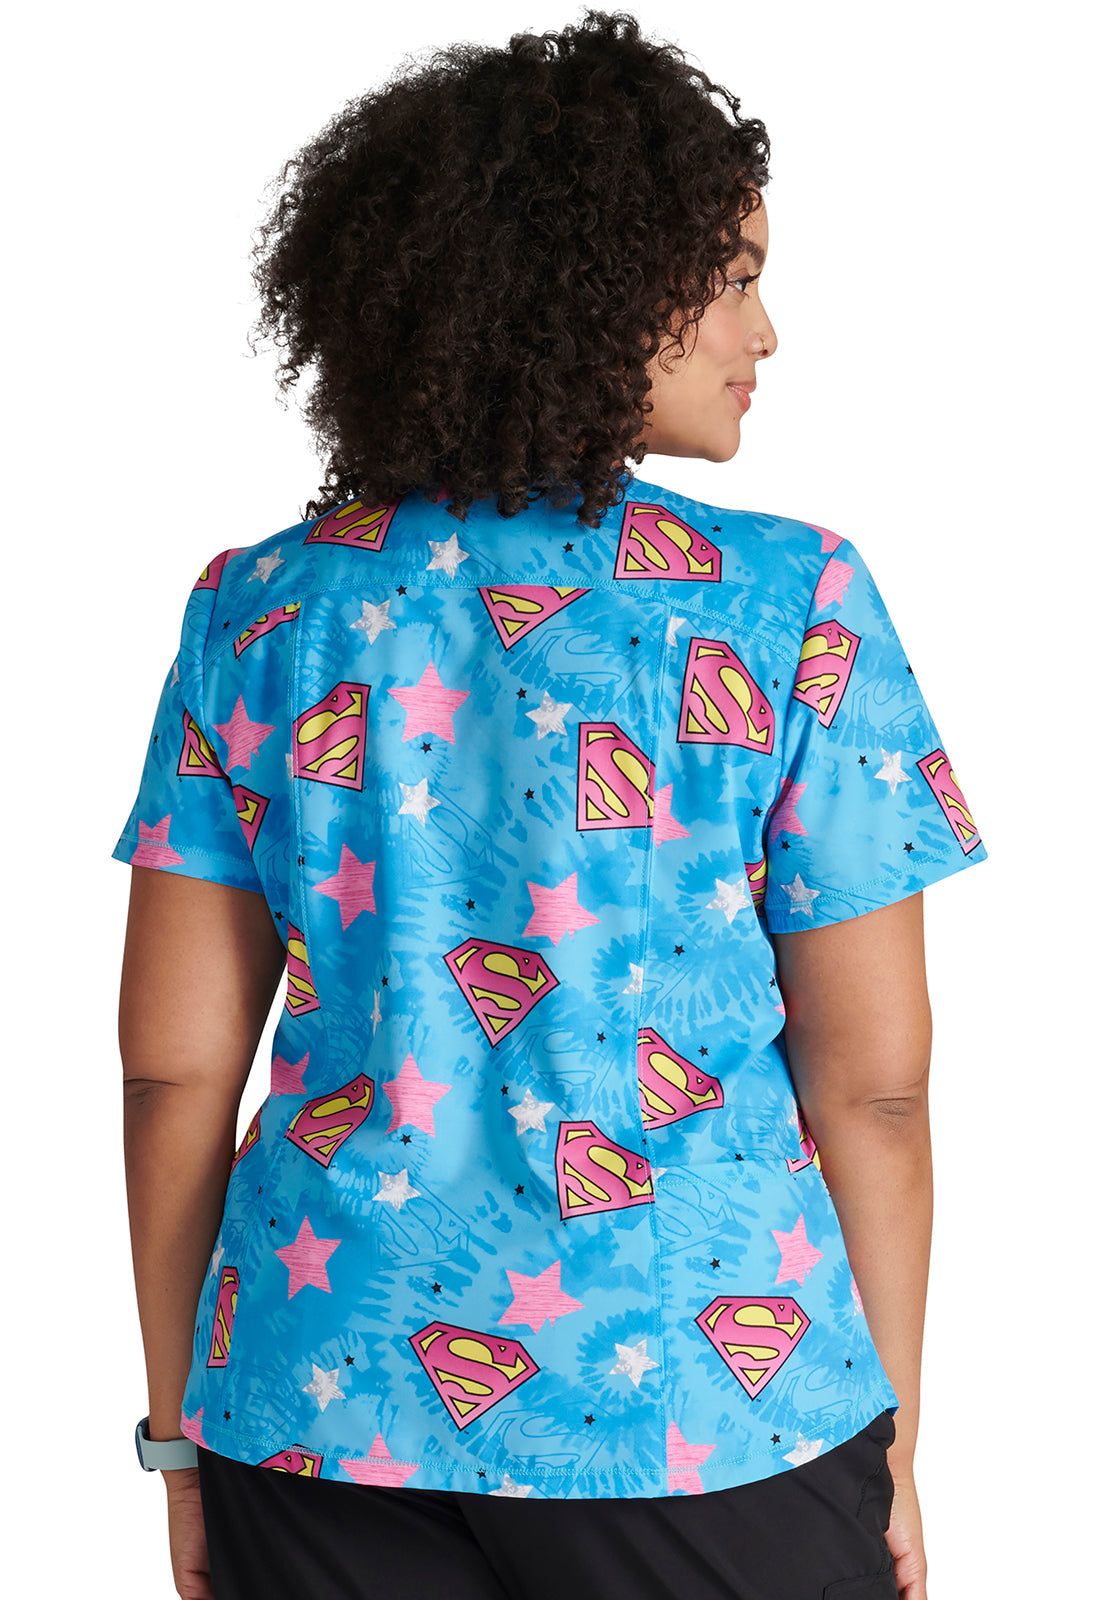 Women's Scrub Tops - Printed Scrub Shirts for Women